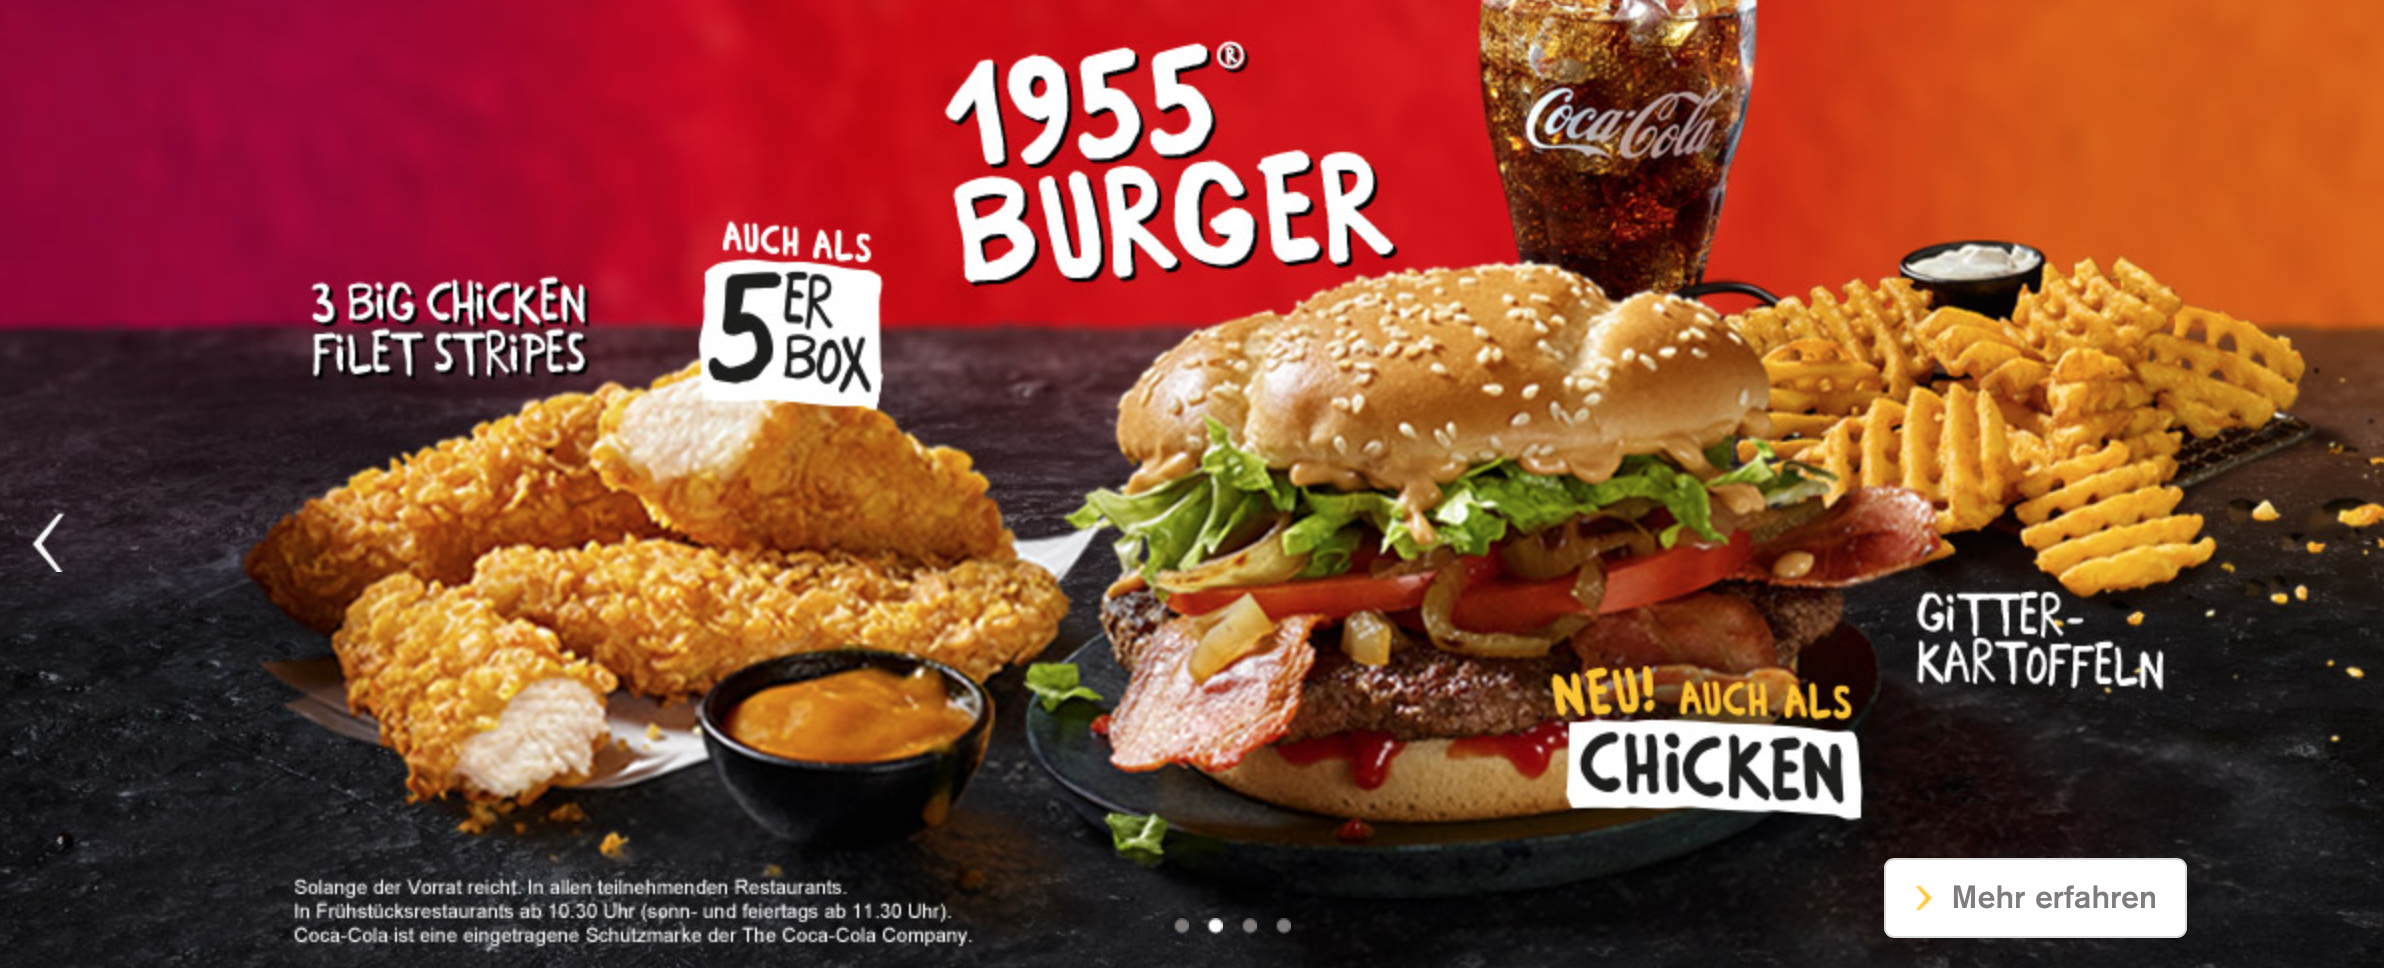 McDonalds 1955 burger meal deal